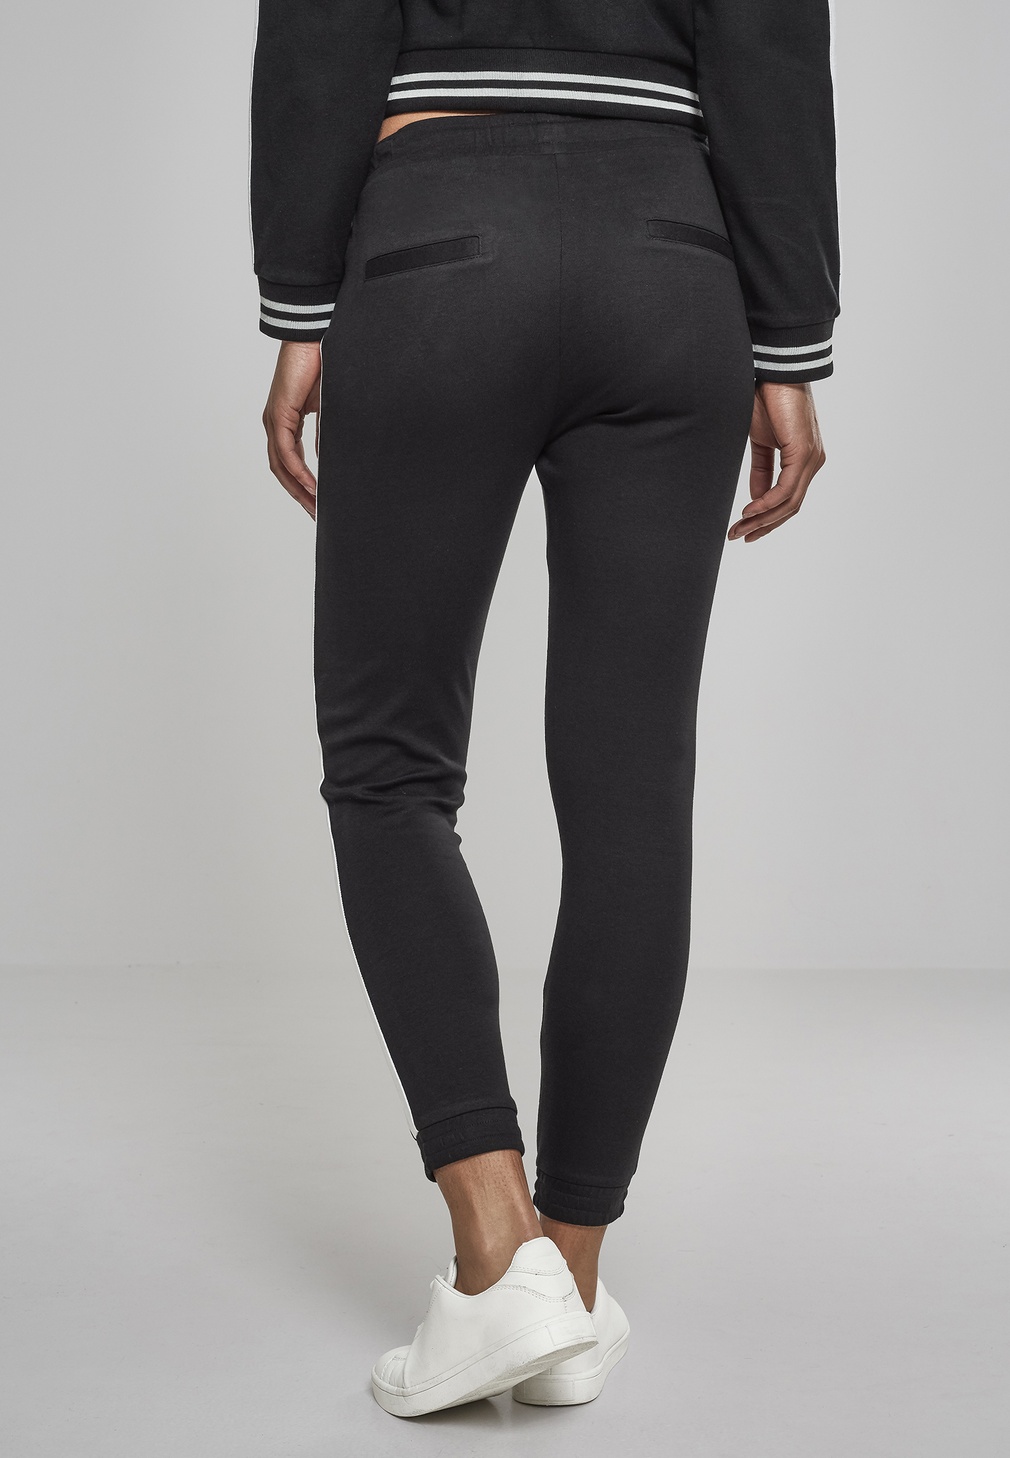 Black/White | | Ladies | Classics Damen Sweatpants Damen Interlock Jogpants Hosen Urban Lifestyle